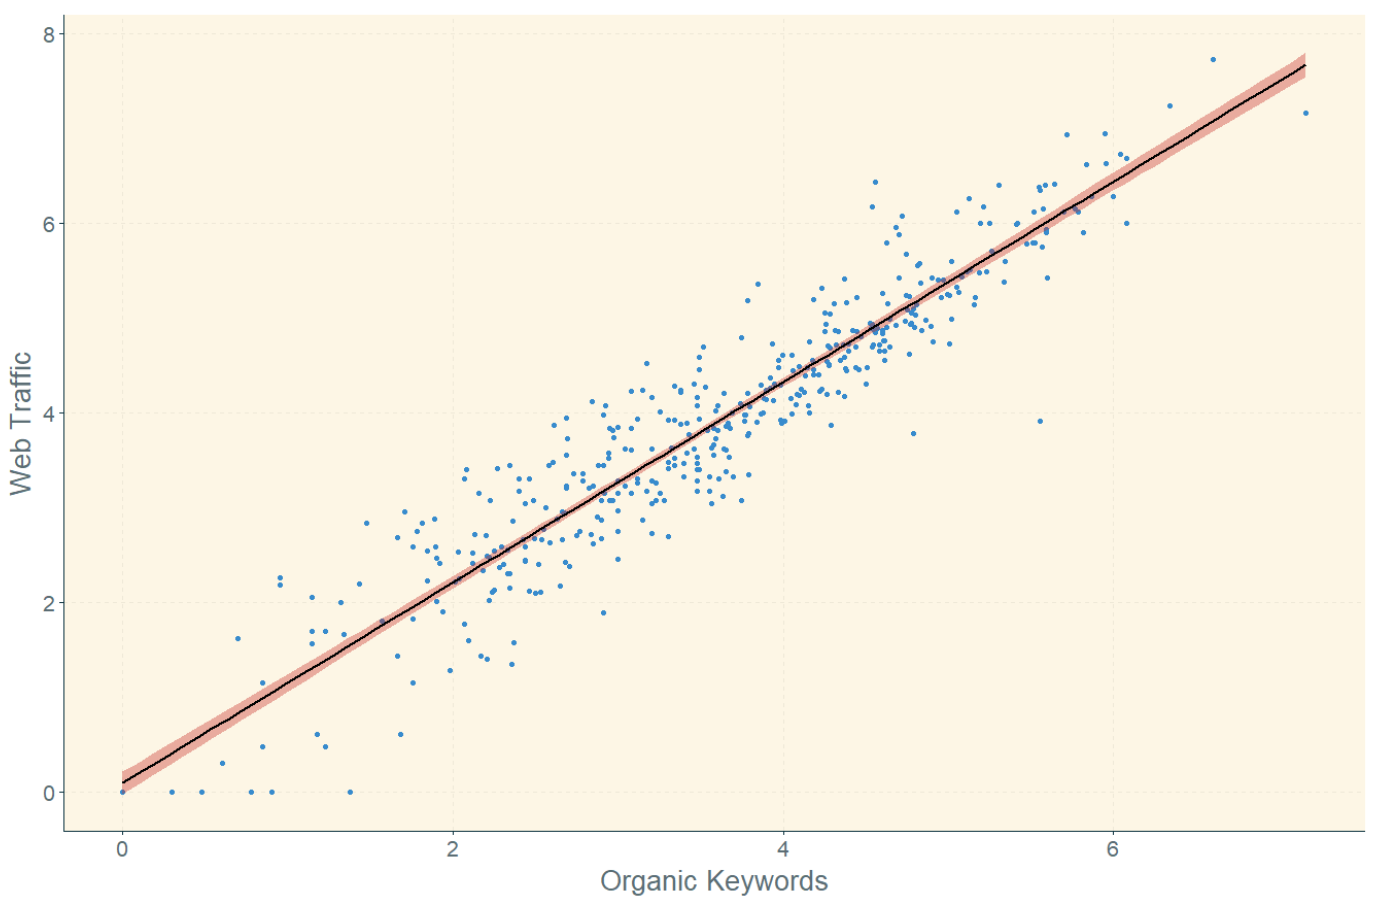 organic keywords vs web traffic